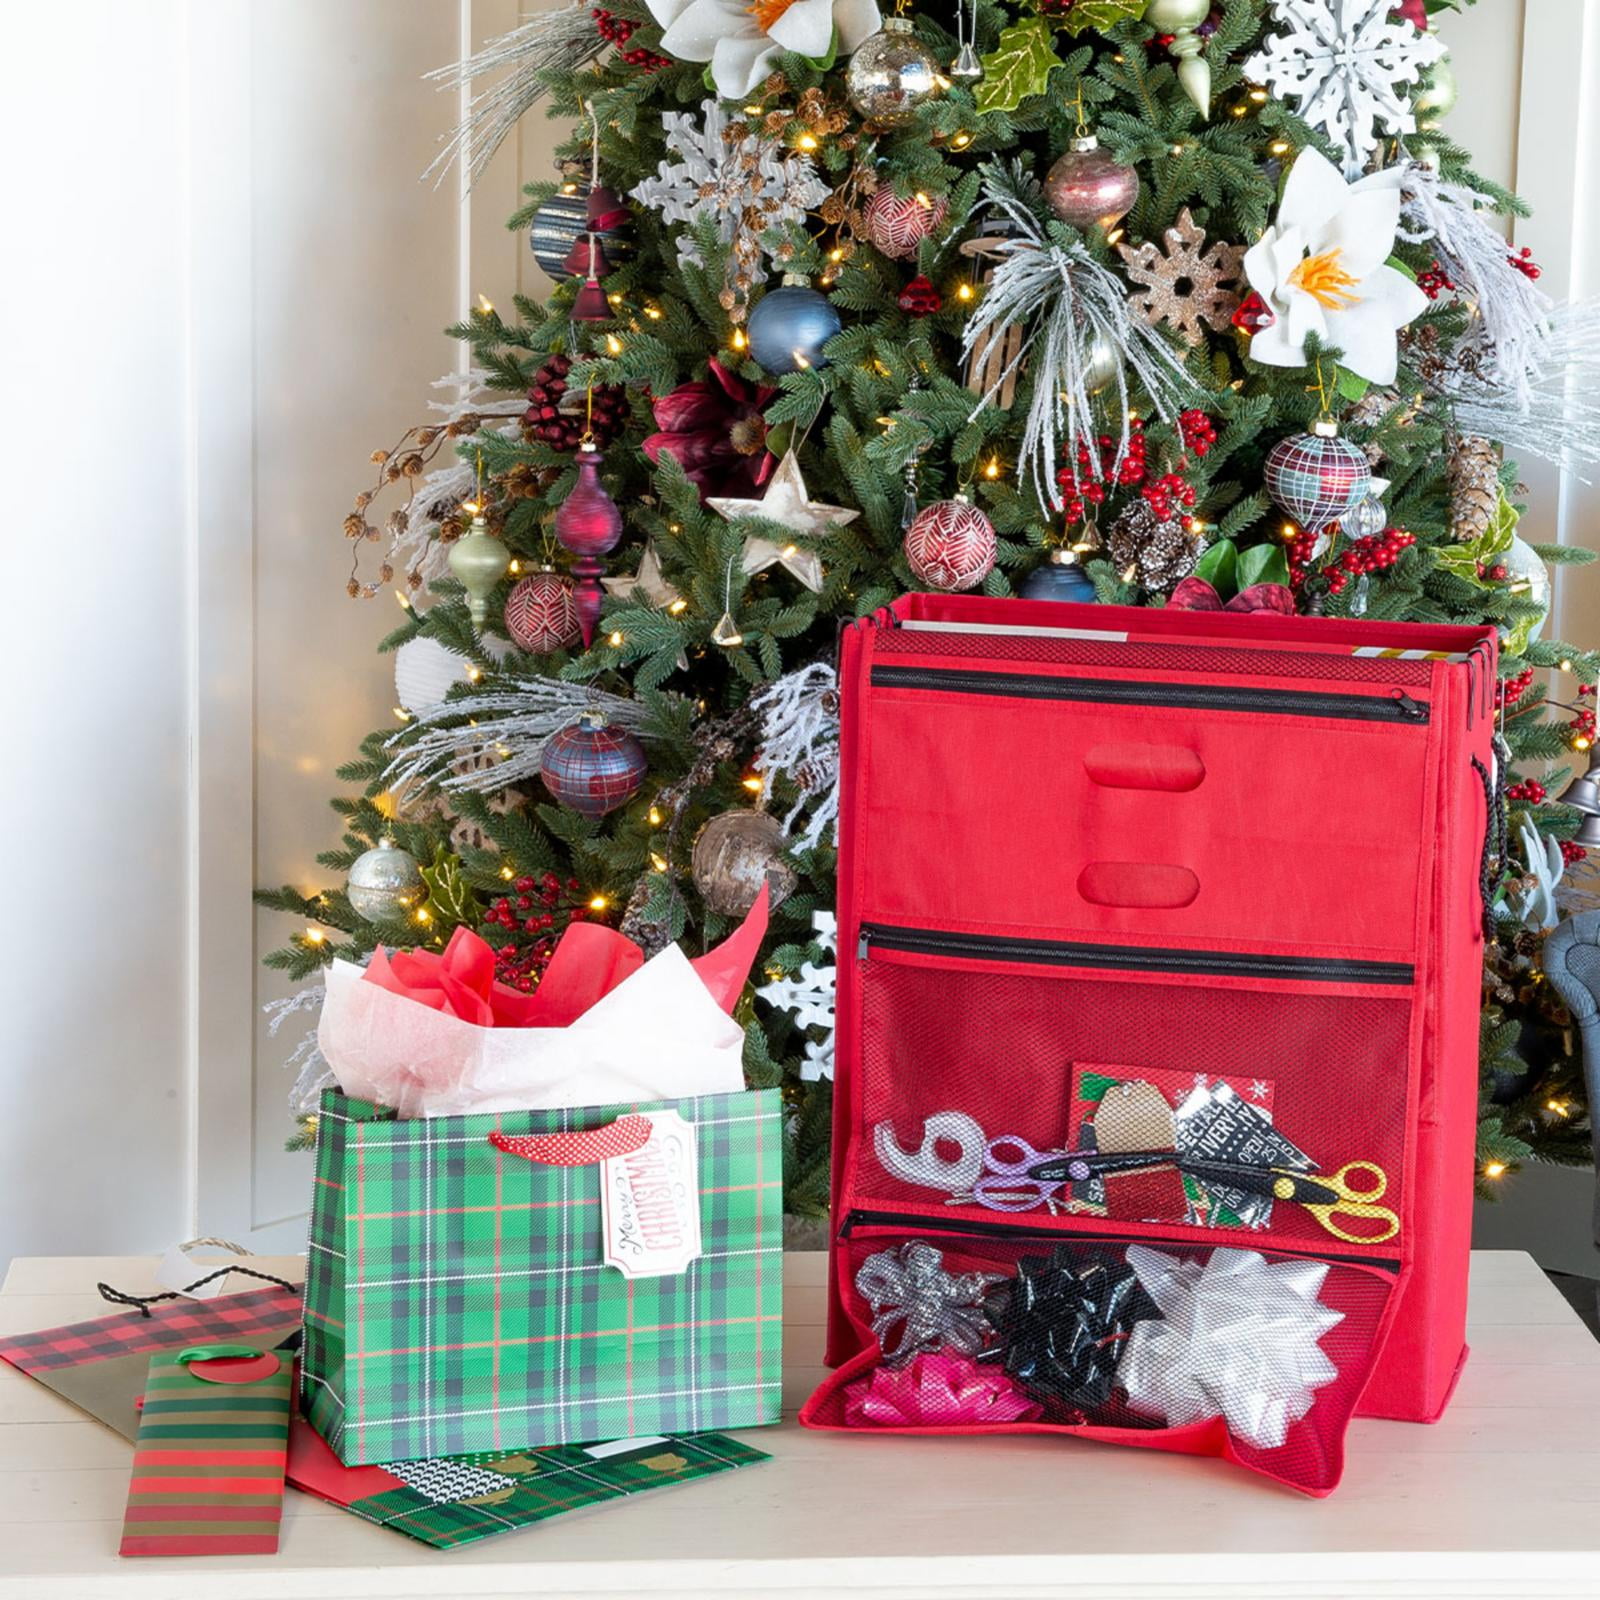 Paper Box Gift Wrap Storage Rebrilliant Color: Red